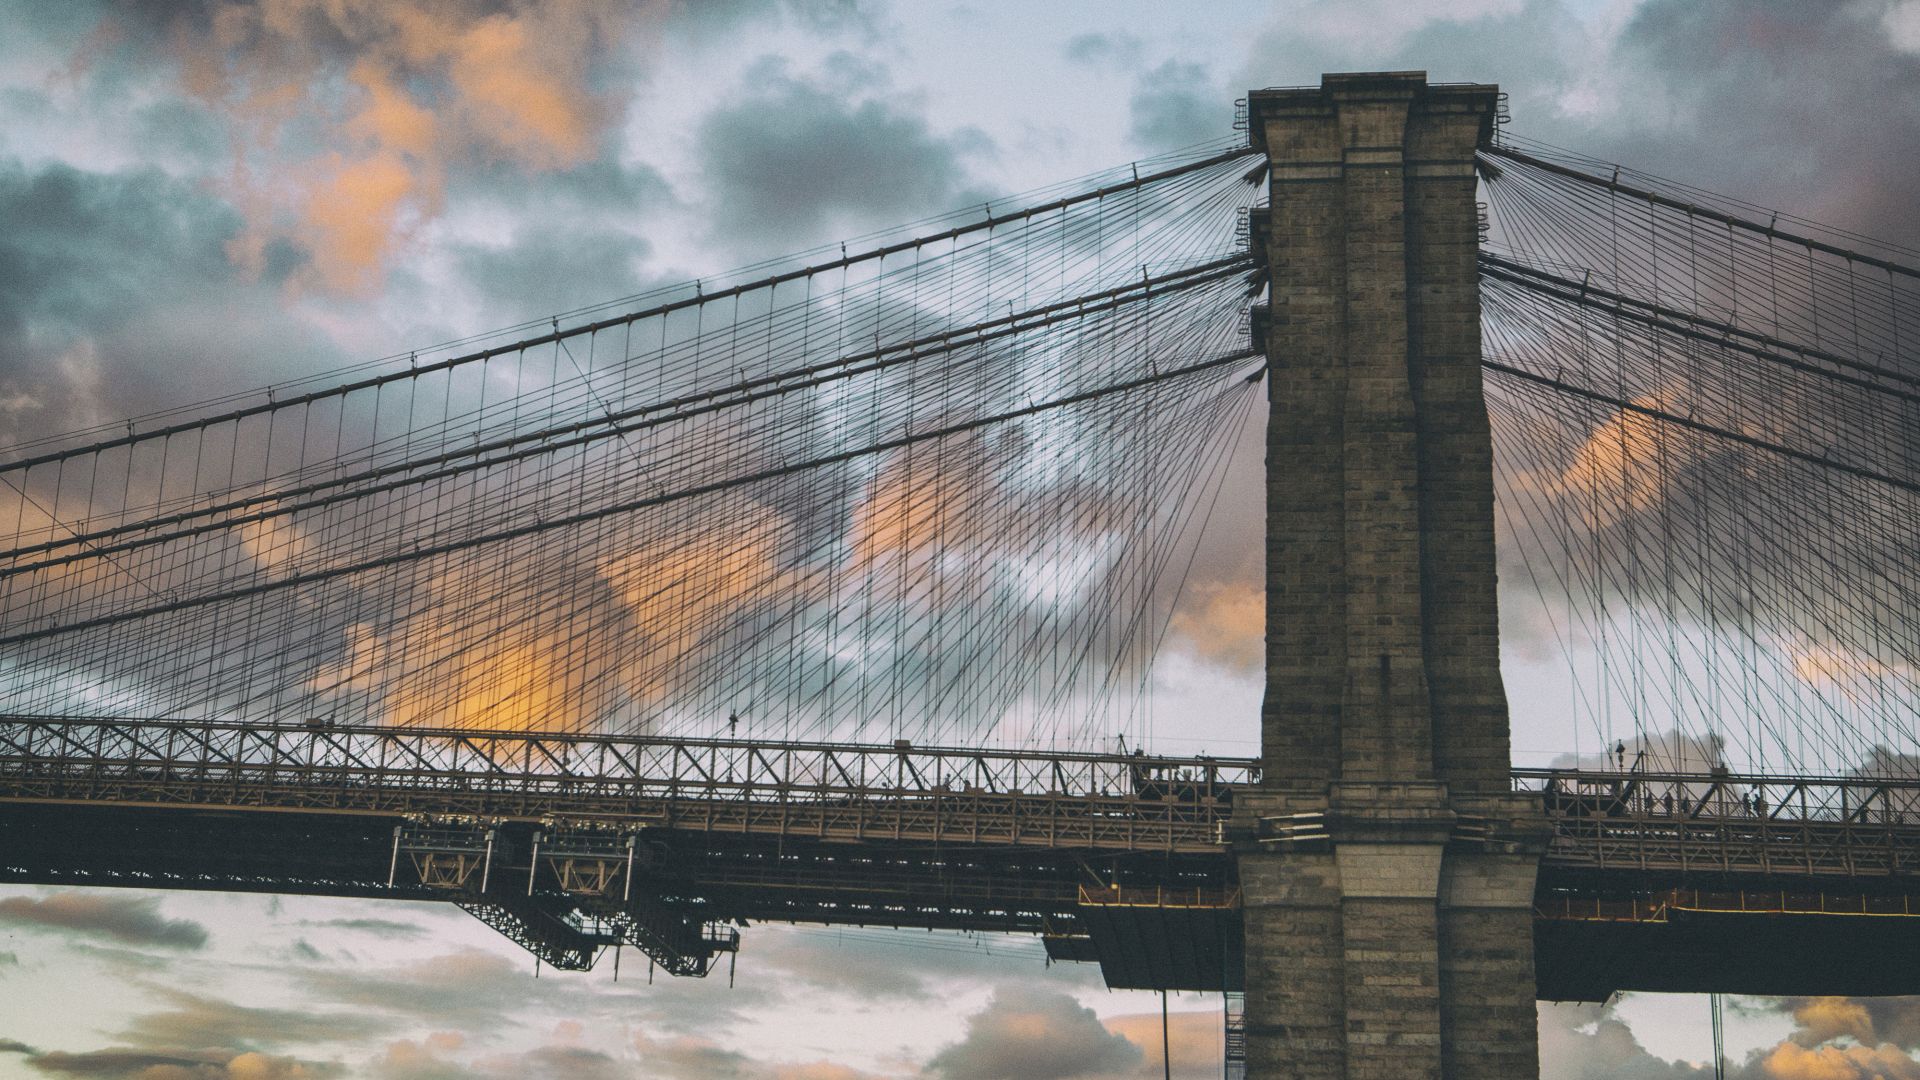 Brooklyn Bridge, New York, Dumbo in Brooklyn, clouds, sunset (horizontal)